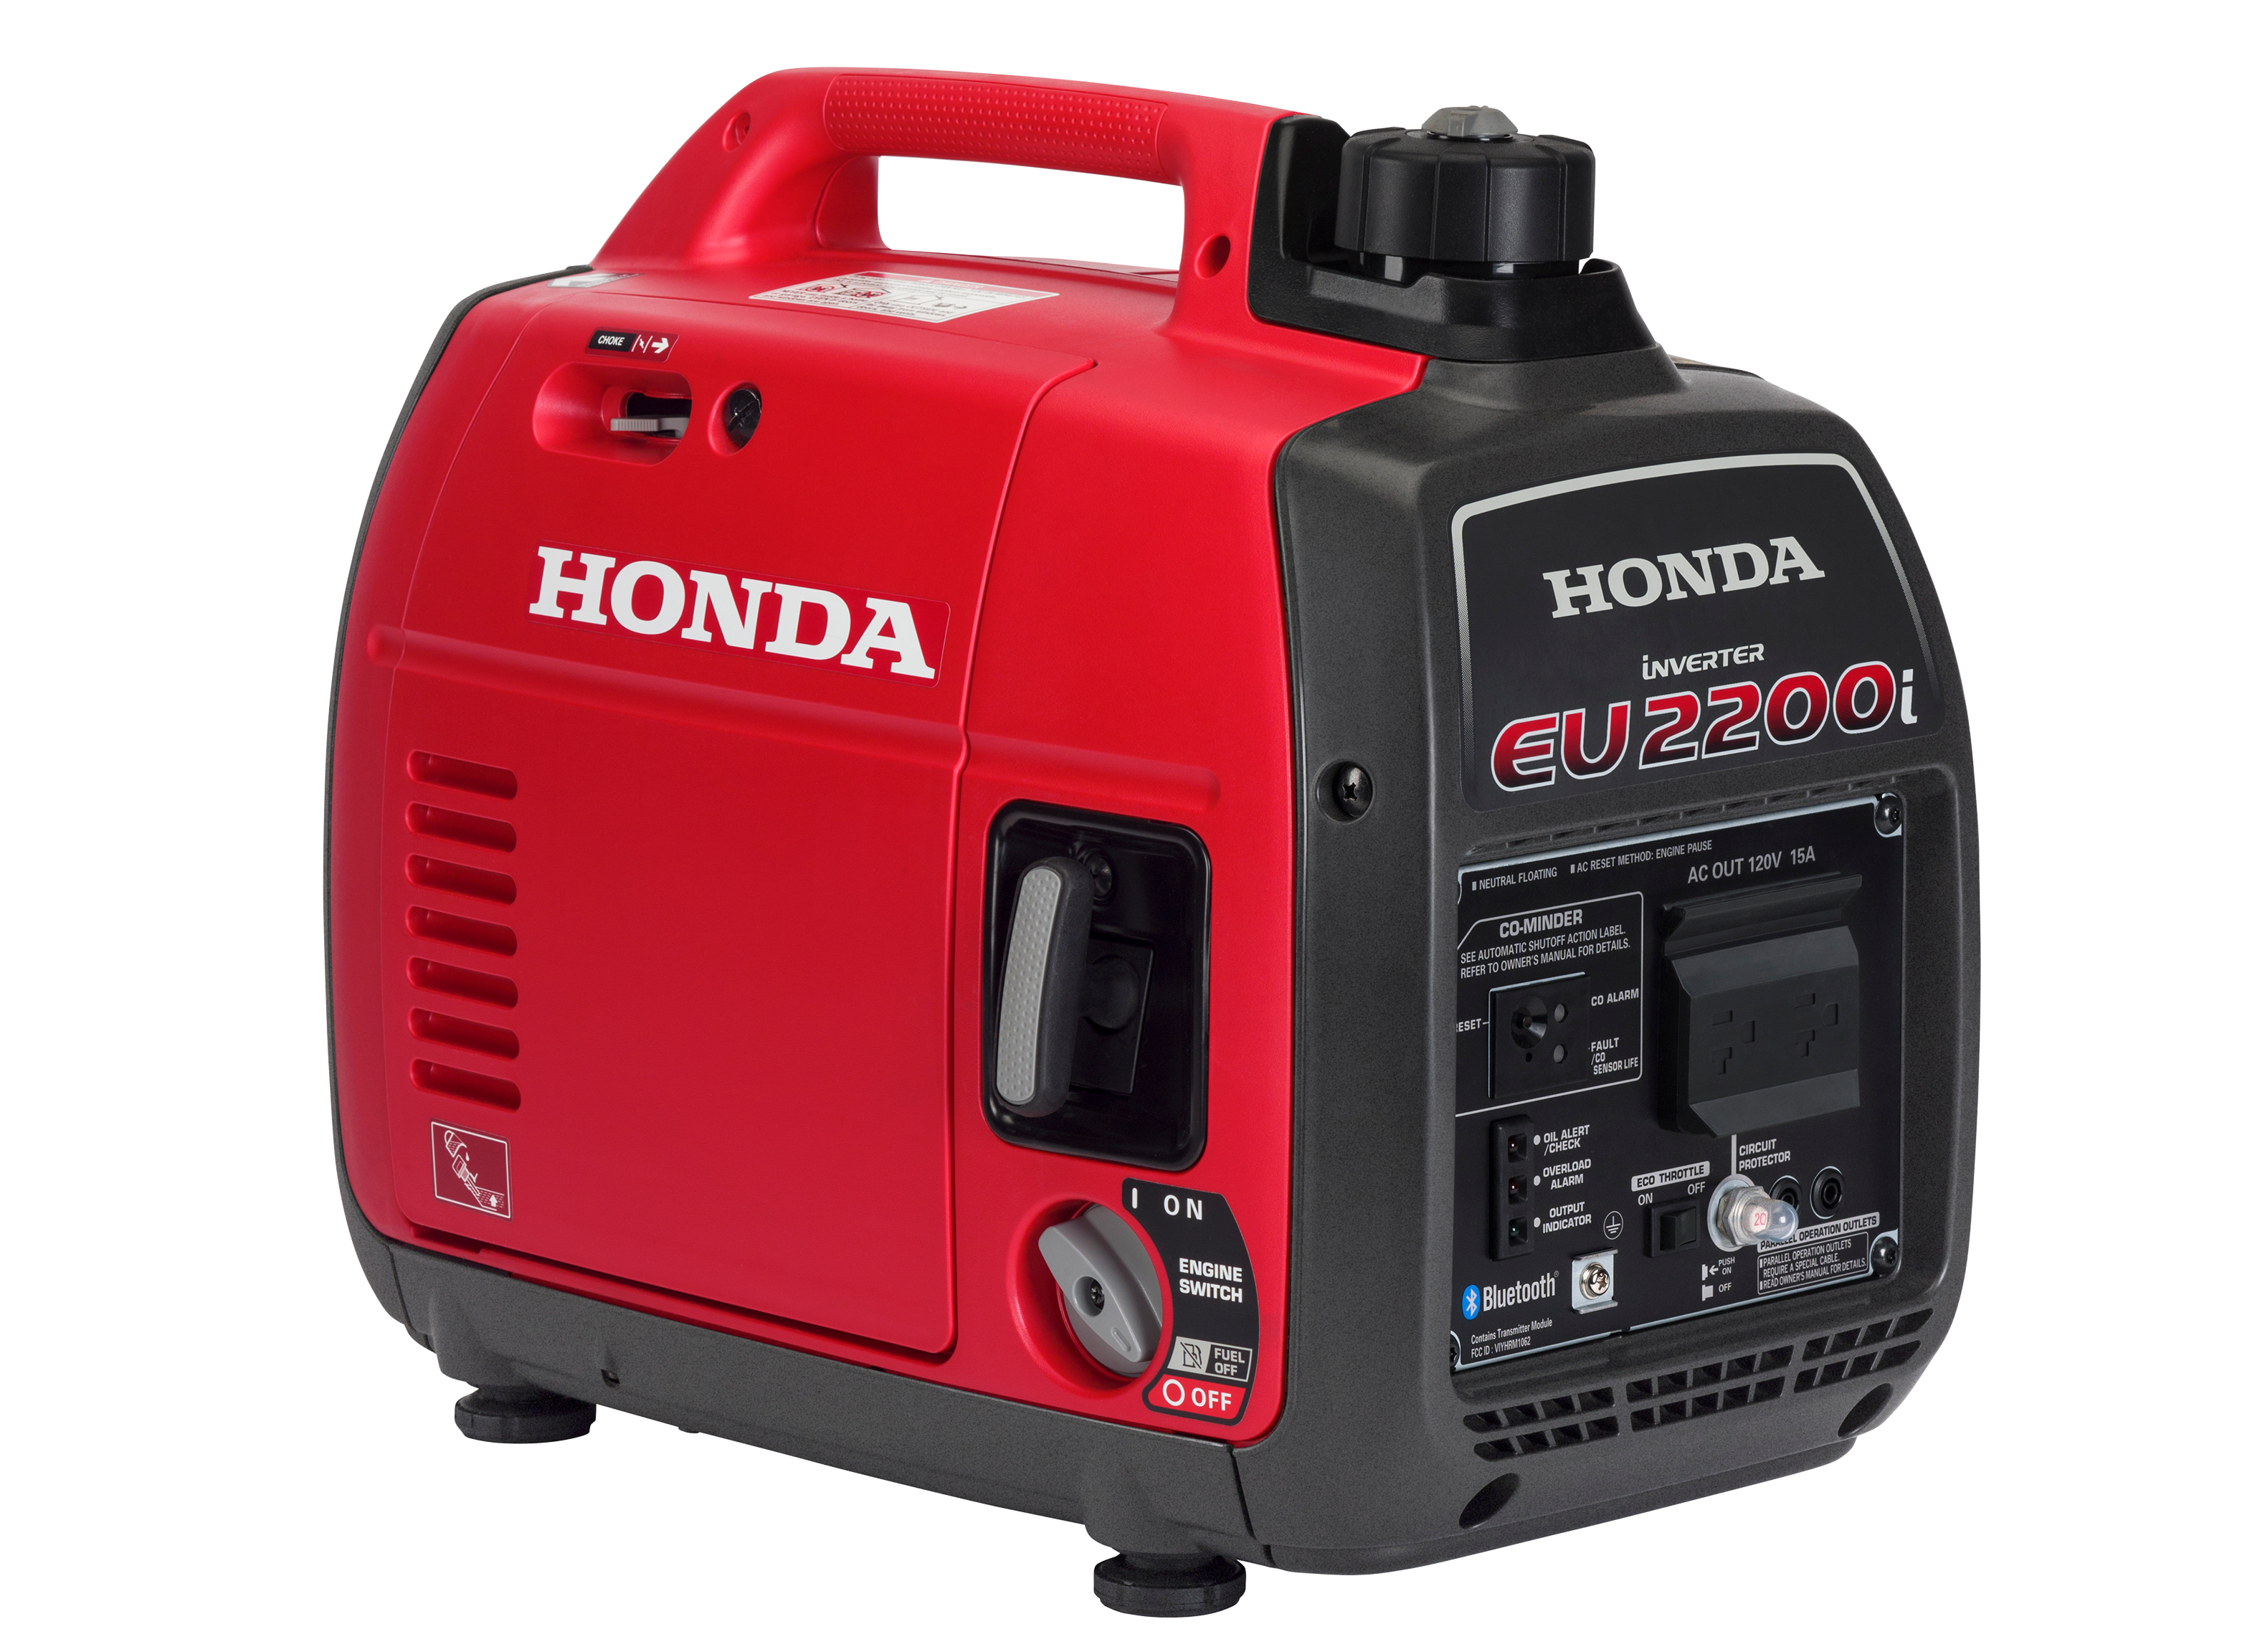 Benefits Of Honda Generators